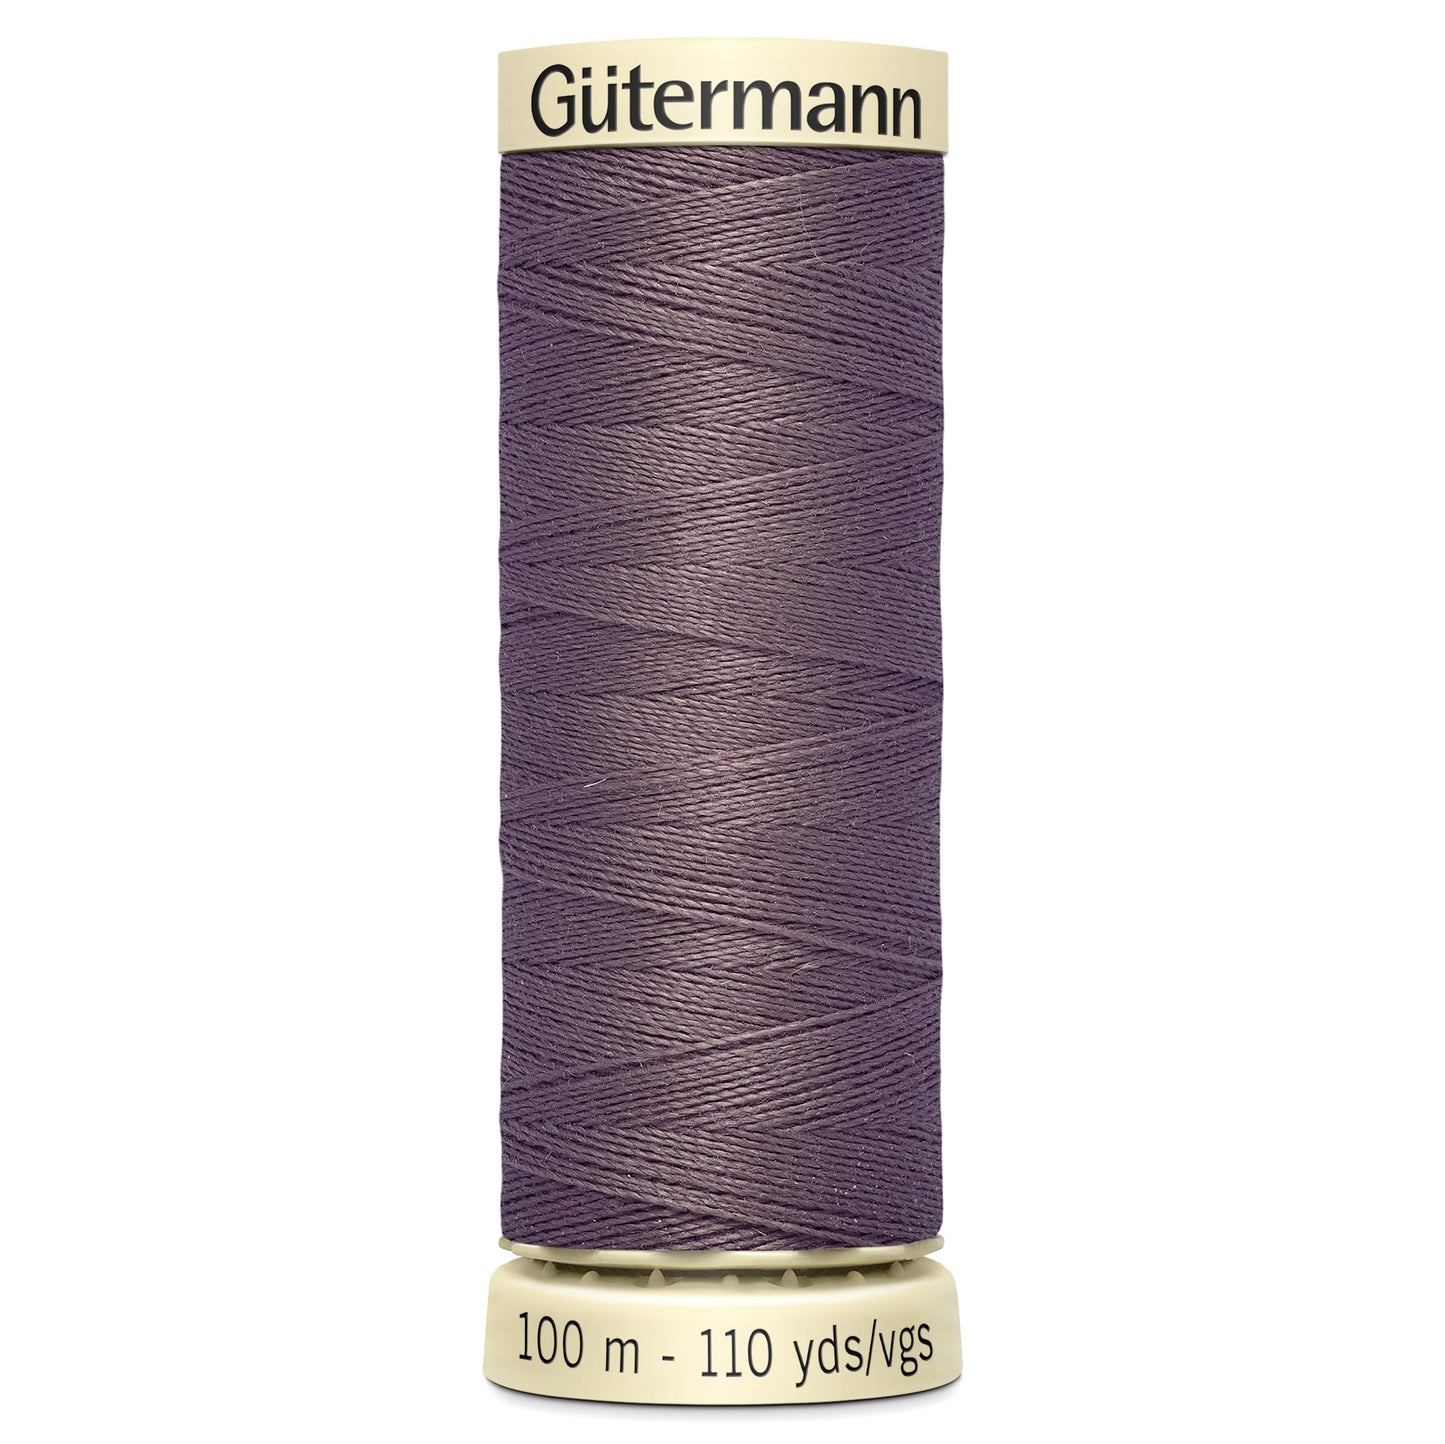 Gutermann Sew All Thread 100m - #127